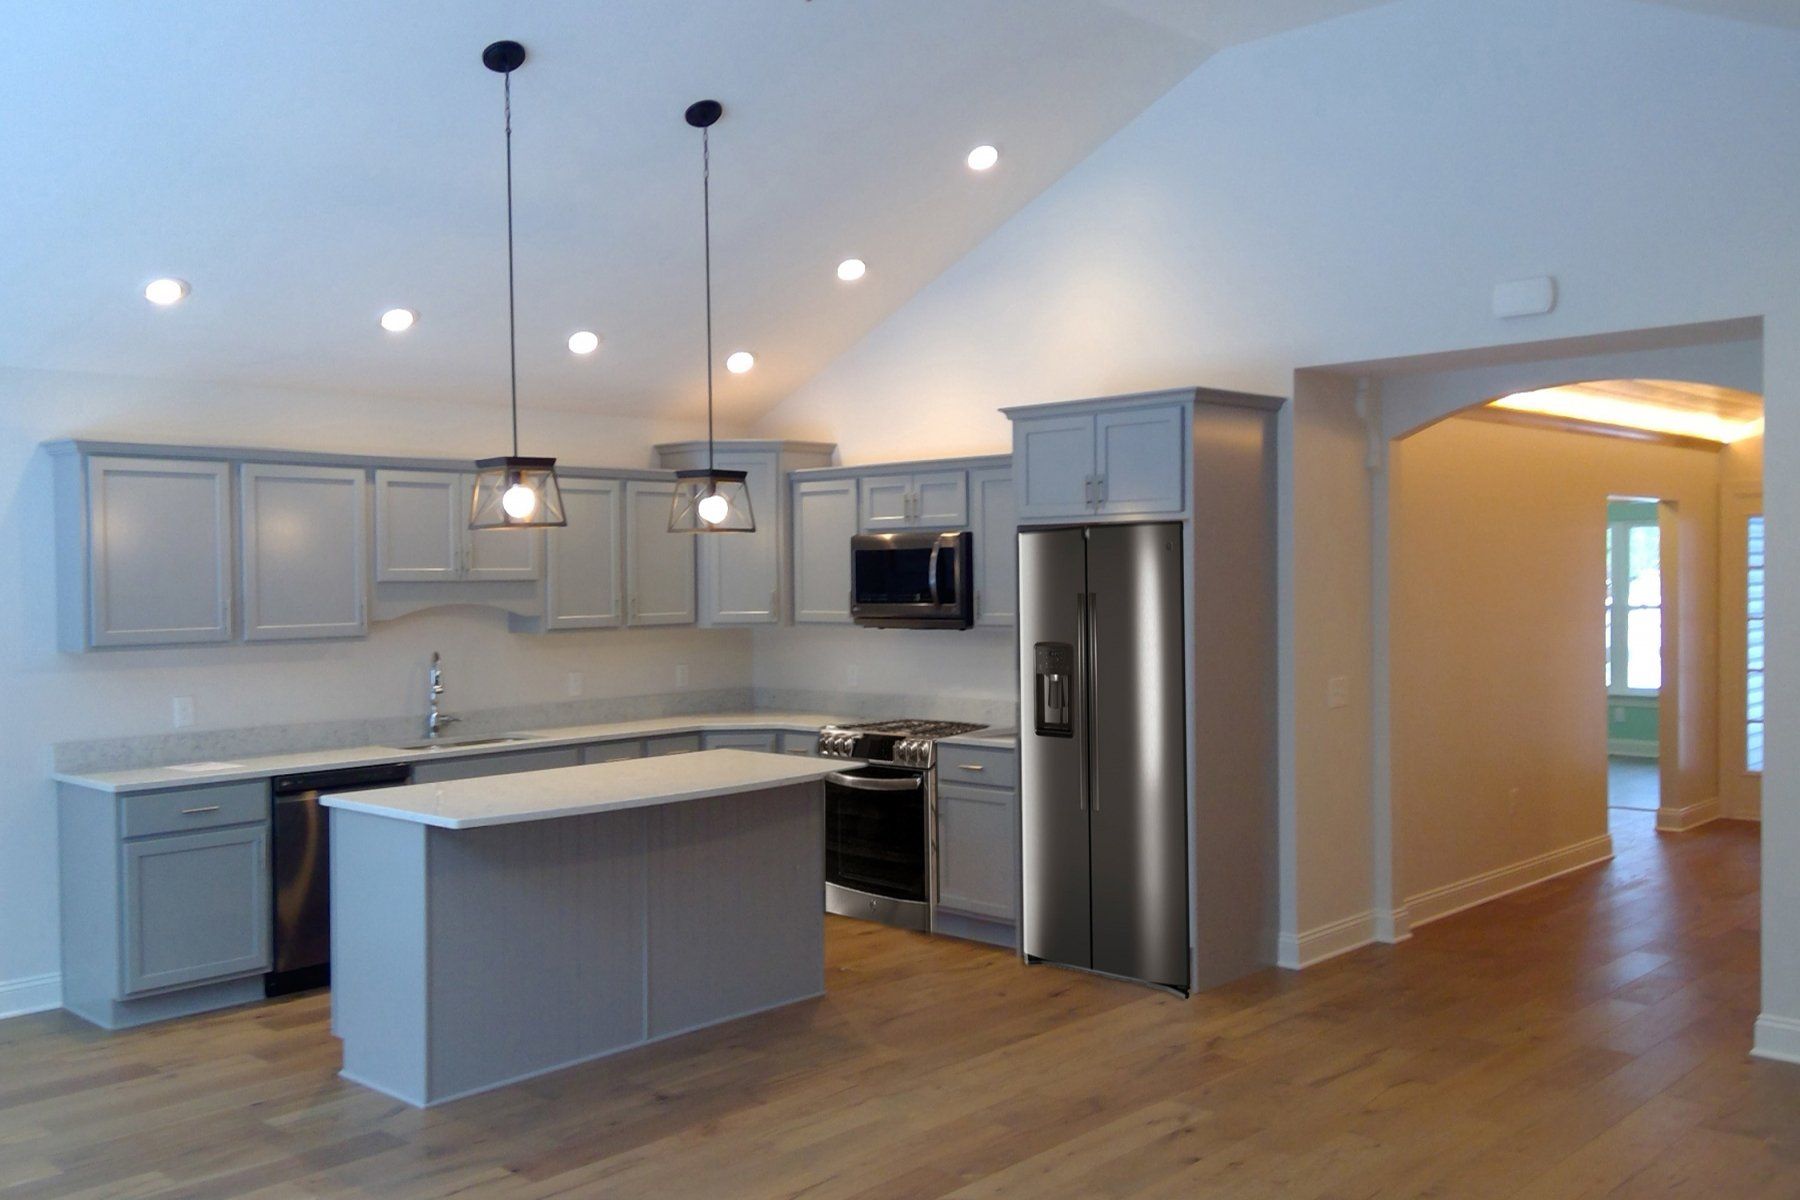 white kitchen with hardwood floor